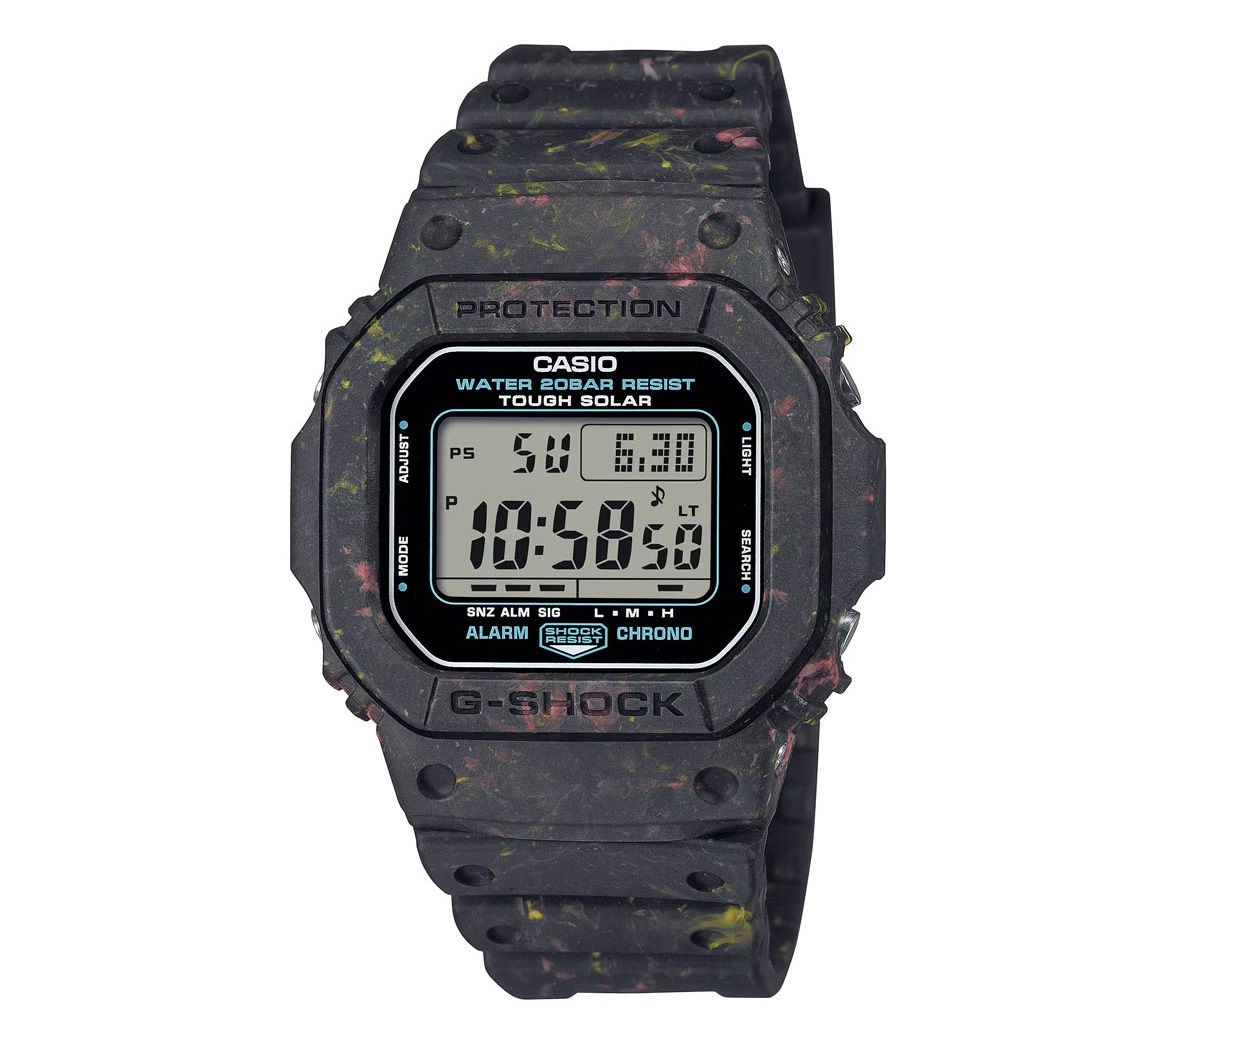 Casio выпустила часы G-Shock G-5600BG-1 с Tough Solar